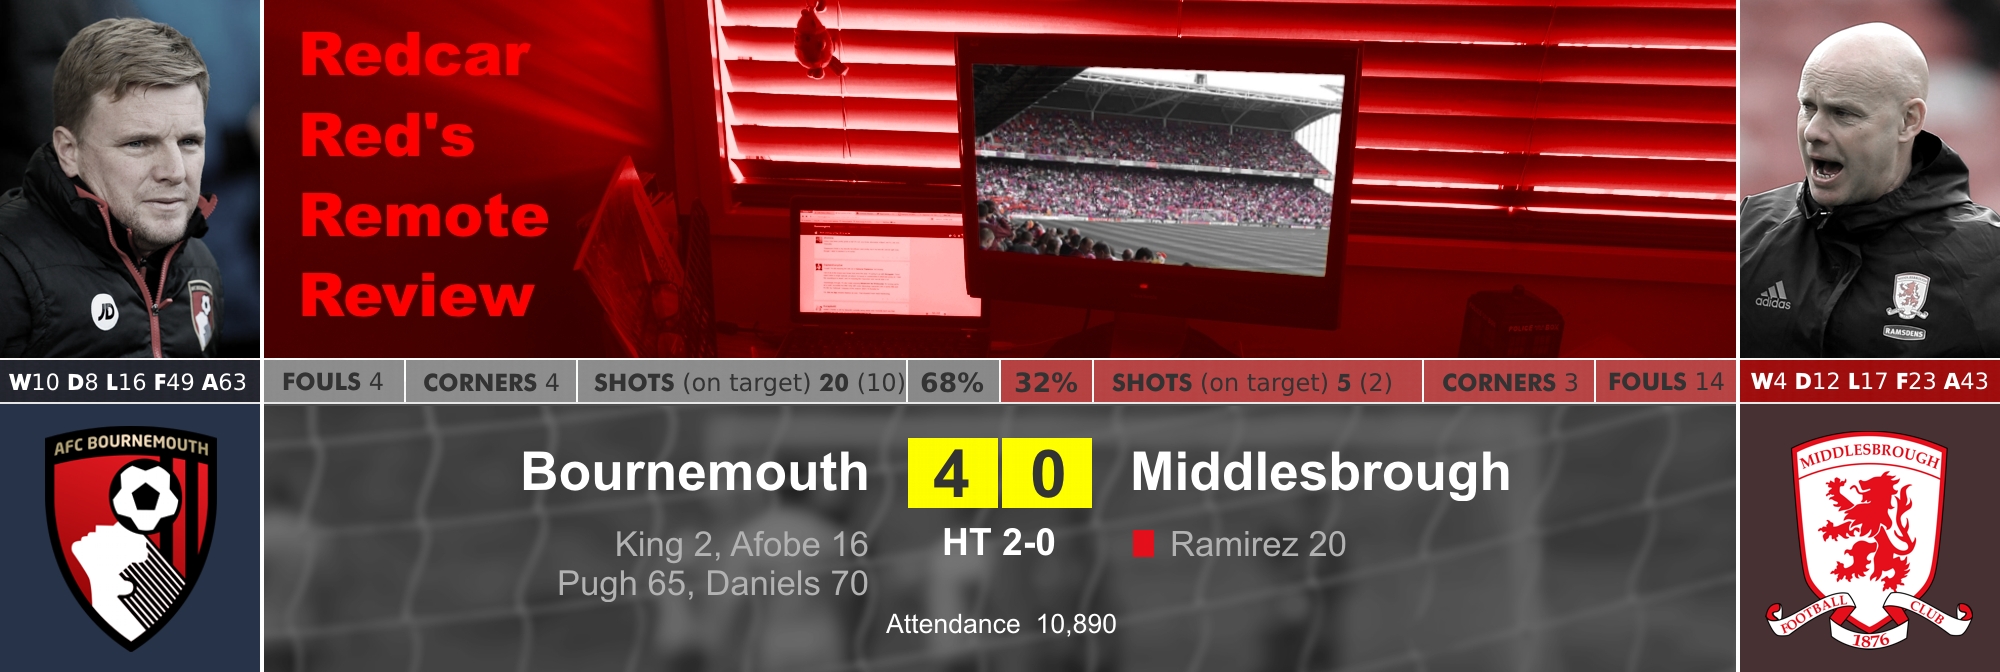 Match Report - Bournemouth